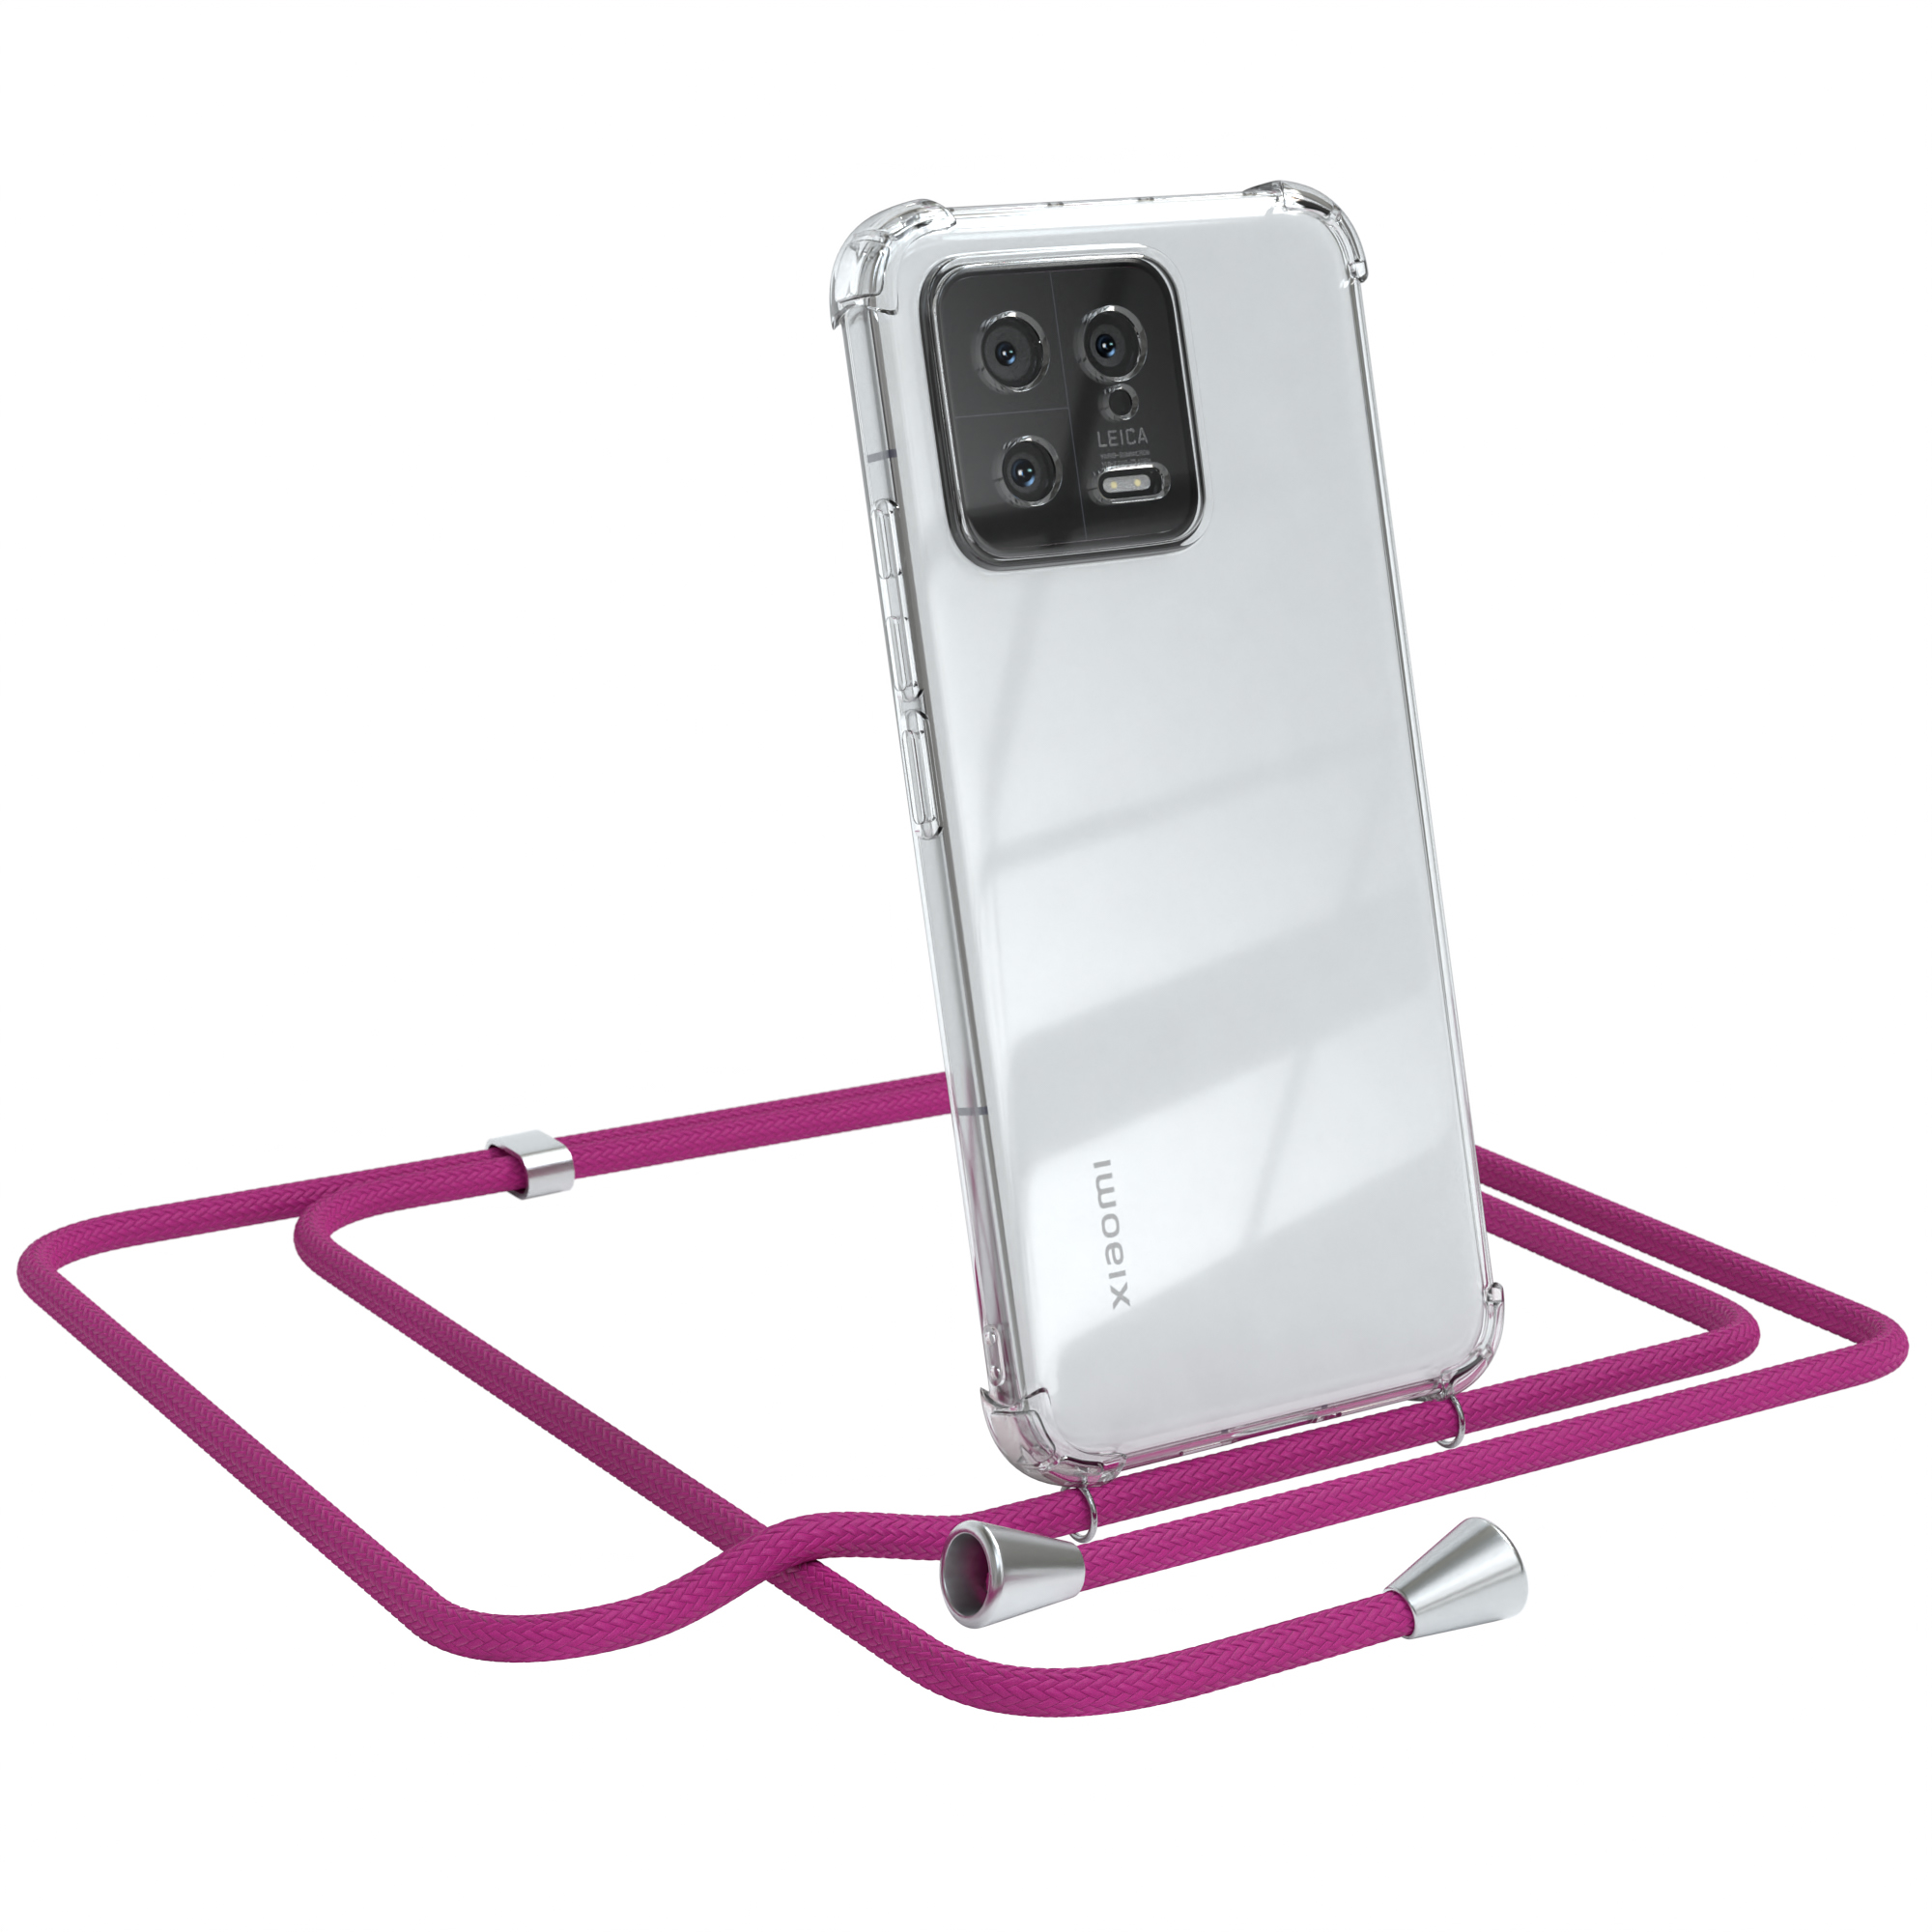 EAZY CASE Clear Cover mit Umhängeband, 13, Clips Pink Silber Umhängetasche, Xiaomi, 